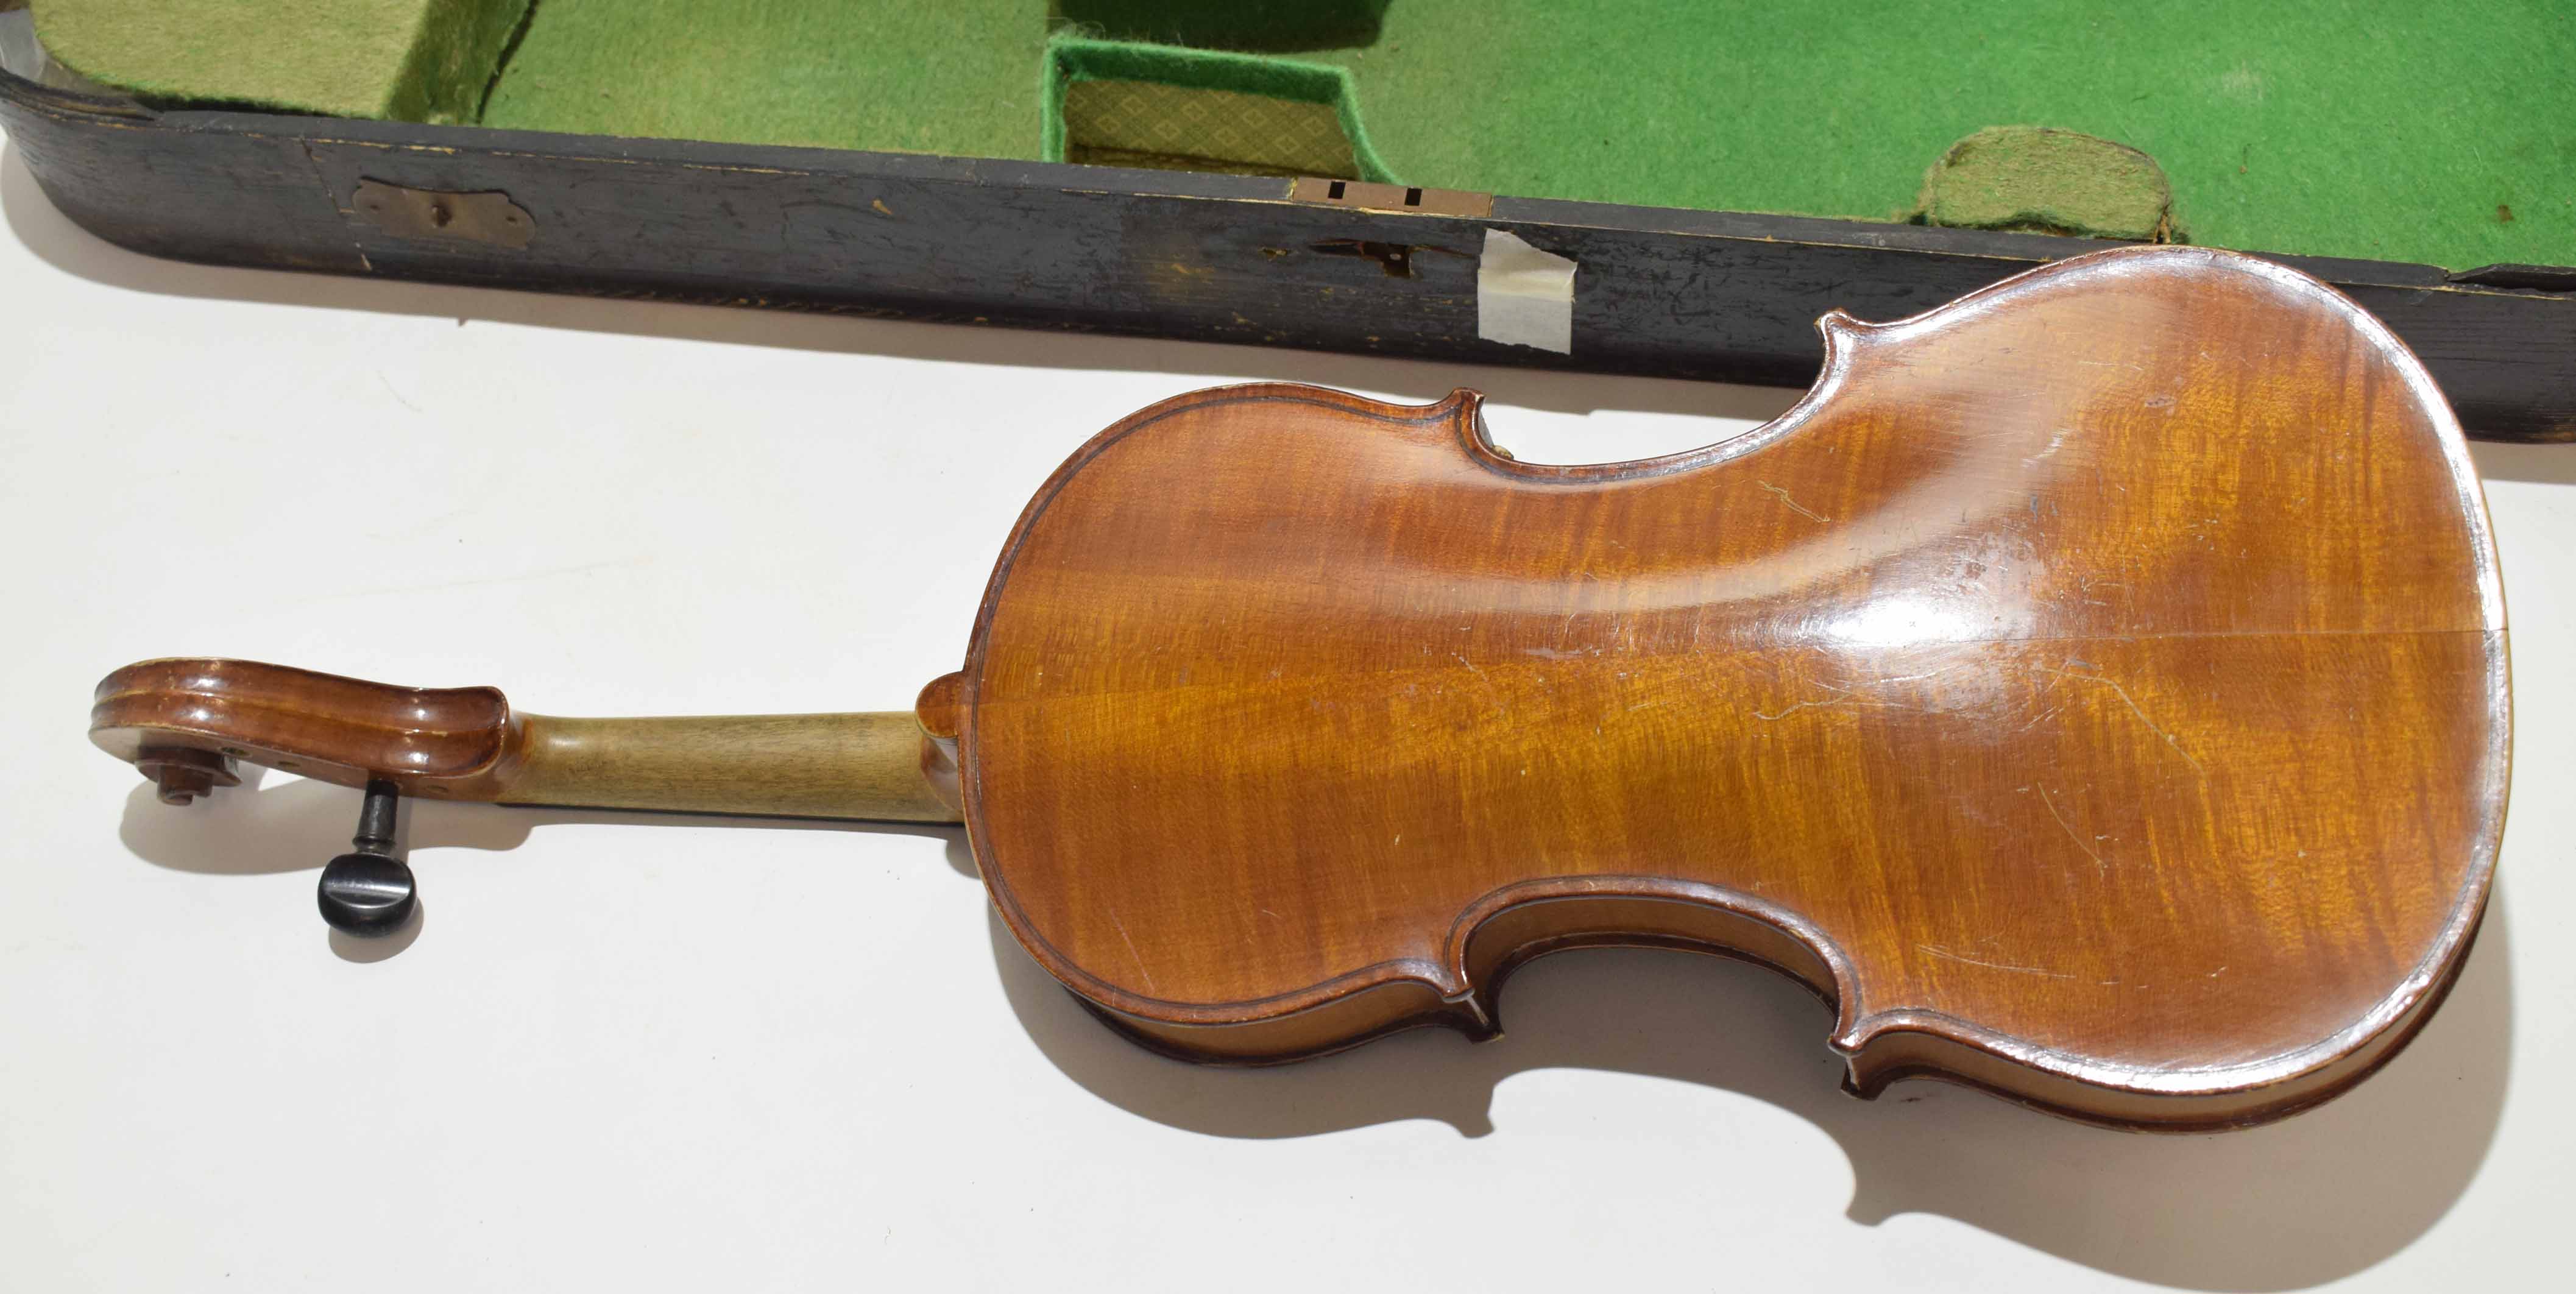 Vintage ebonised wooden cased violin and bow (lacking strings) (af) - Image 6 of 7